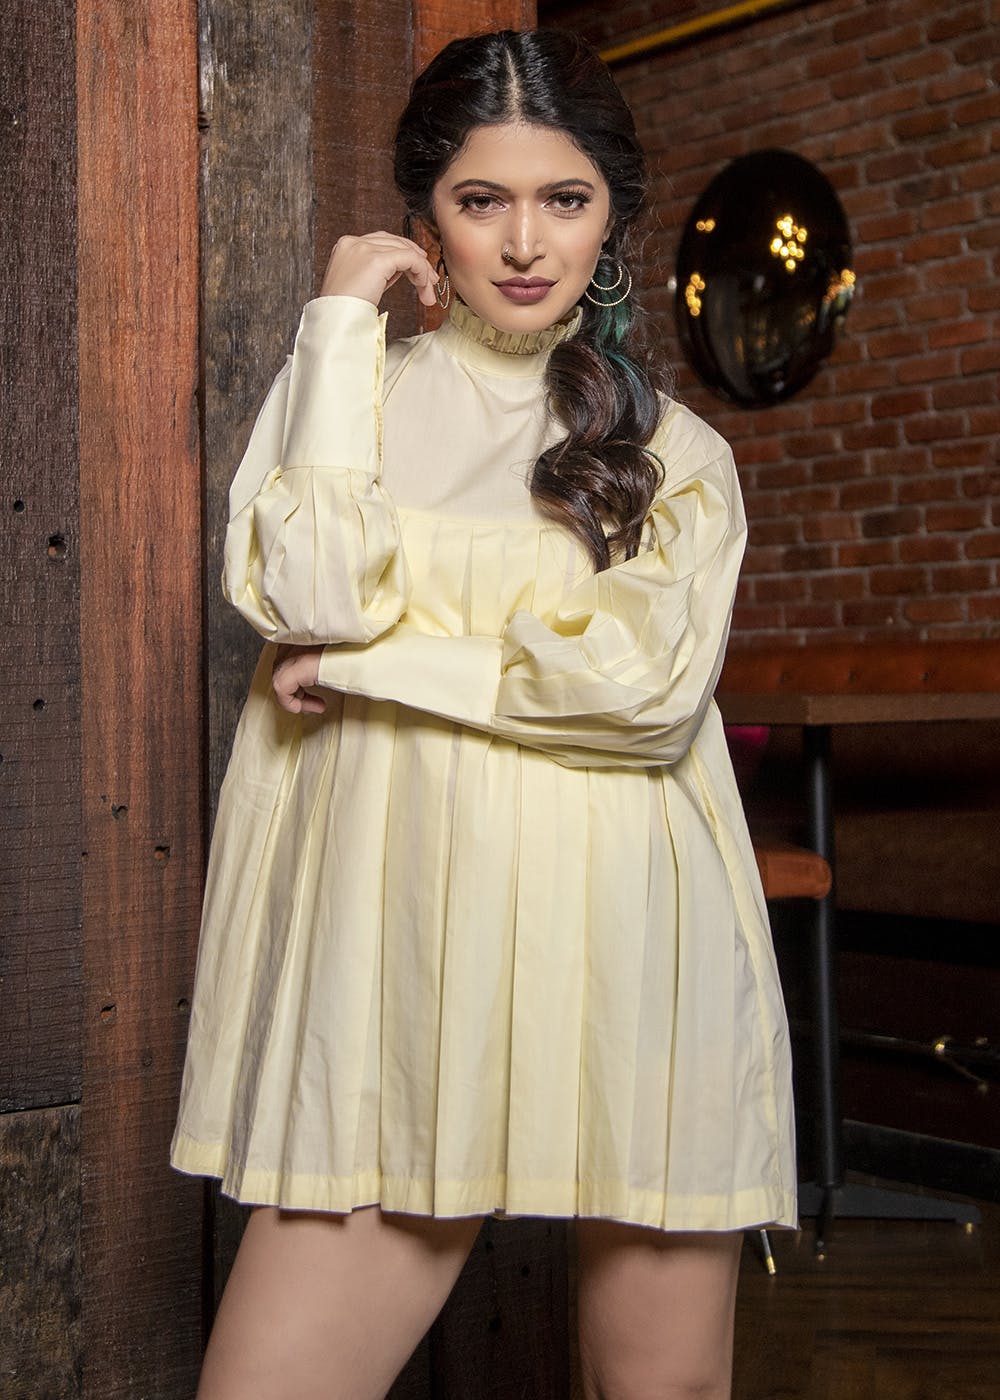 Buy Stylish Lace Kurti Online | Saree.com